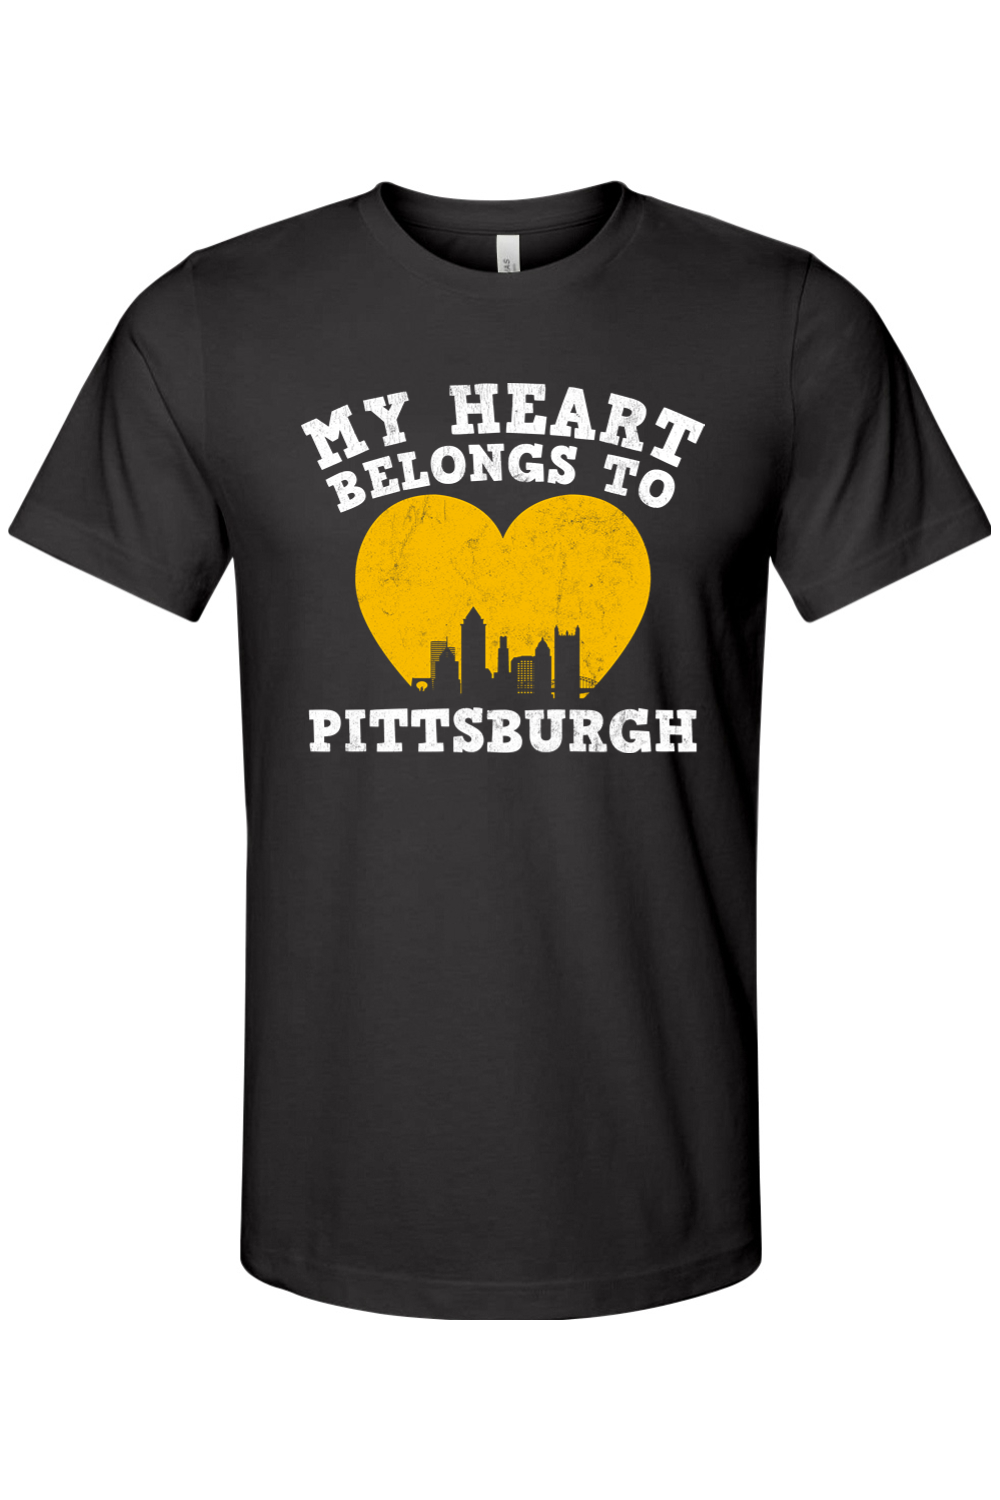 My Heart Belongs to Pittsburgh - Yinzylvania